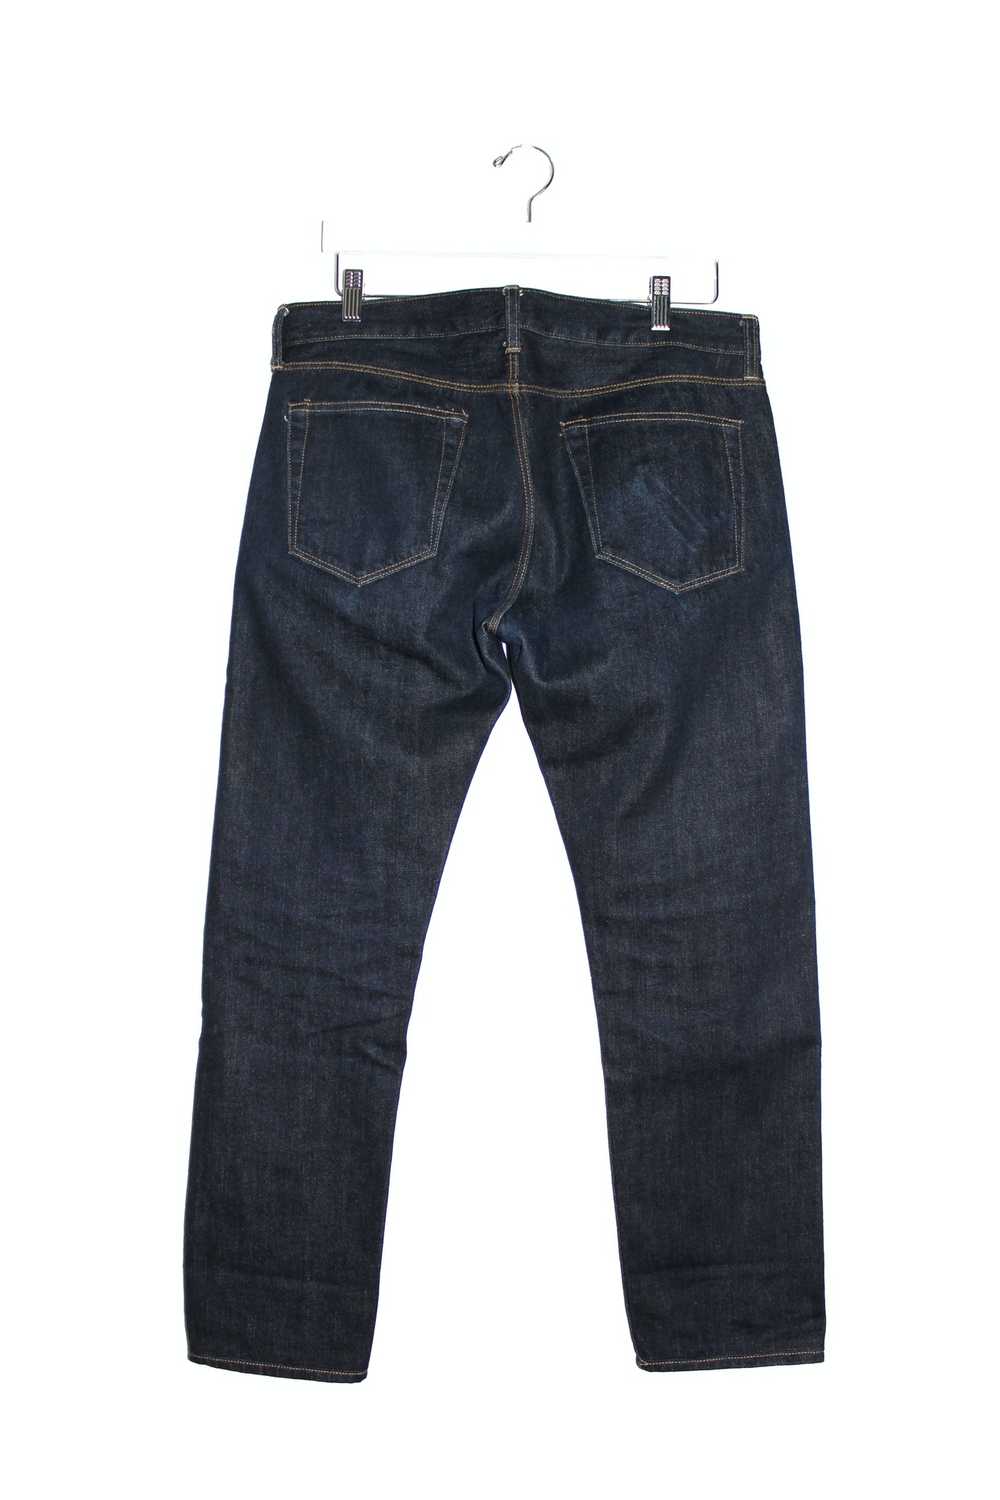 J.Crew Selvedge Rinsed Denim Jeans - image 2